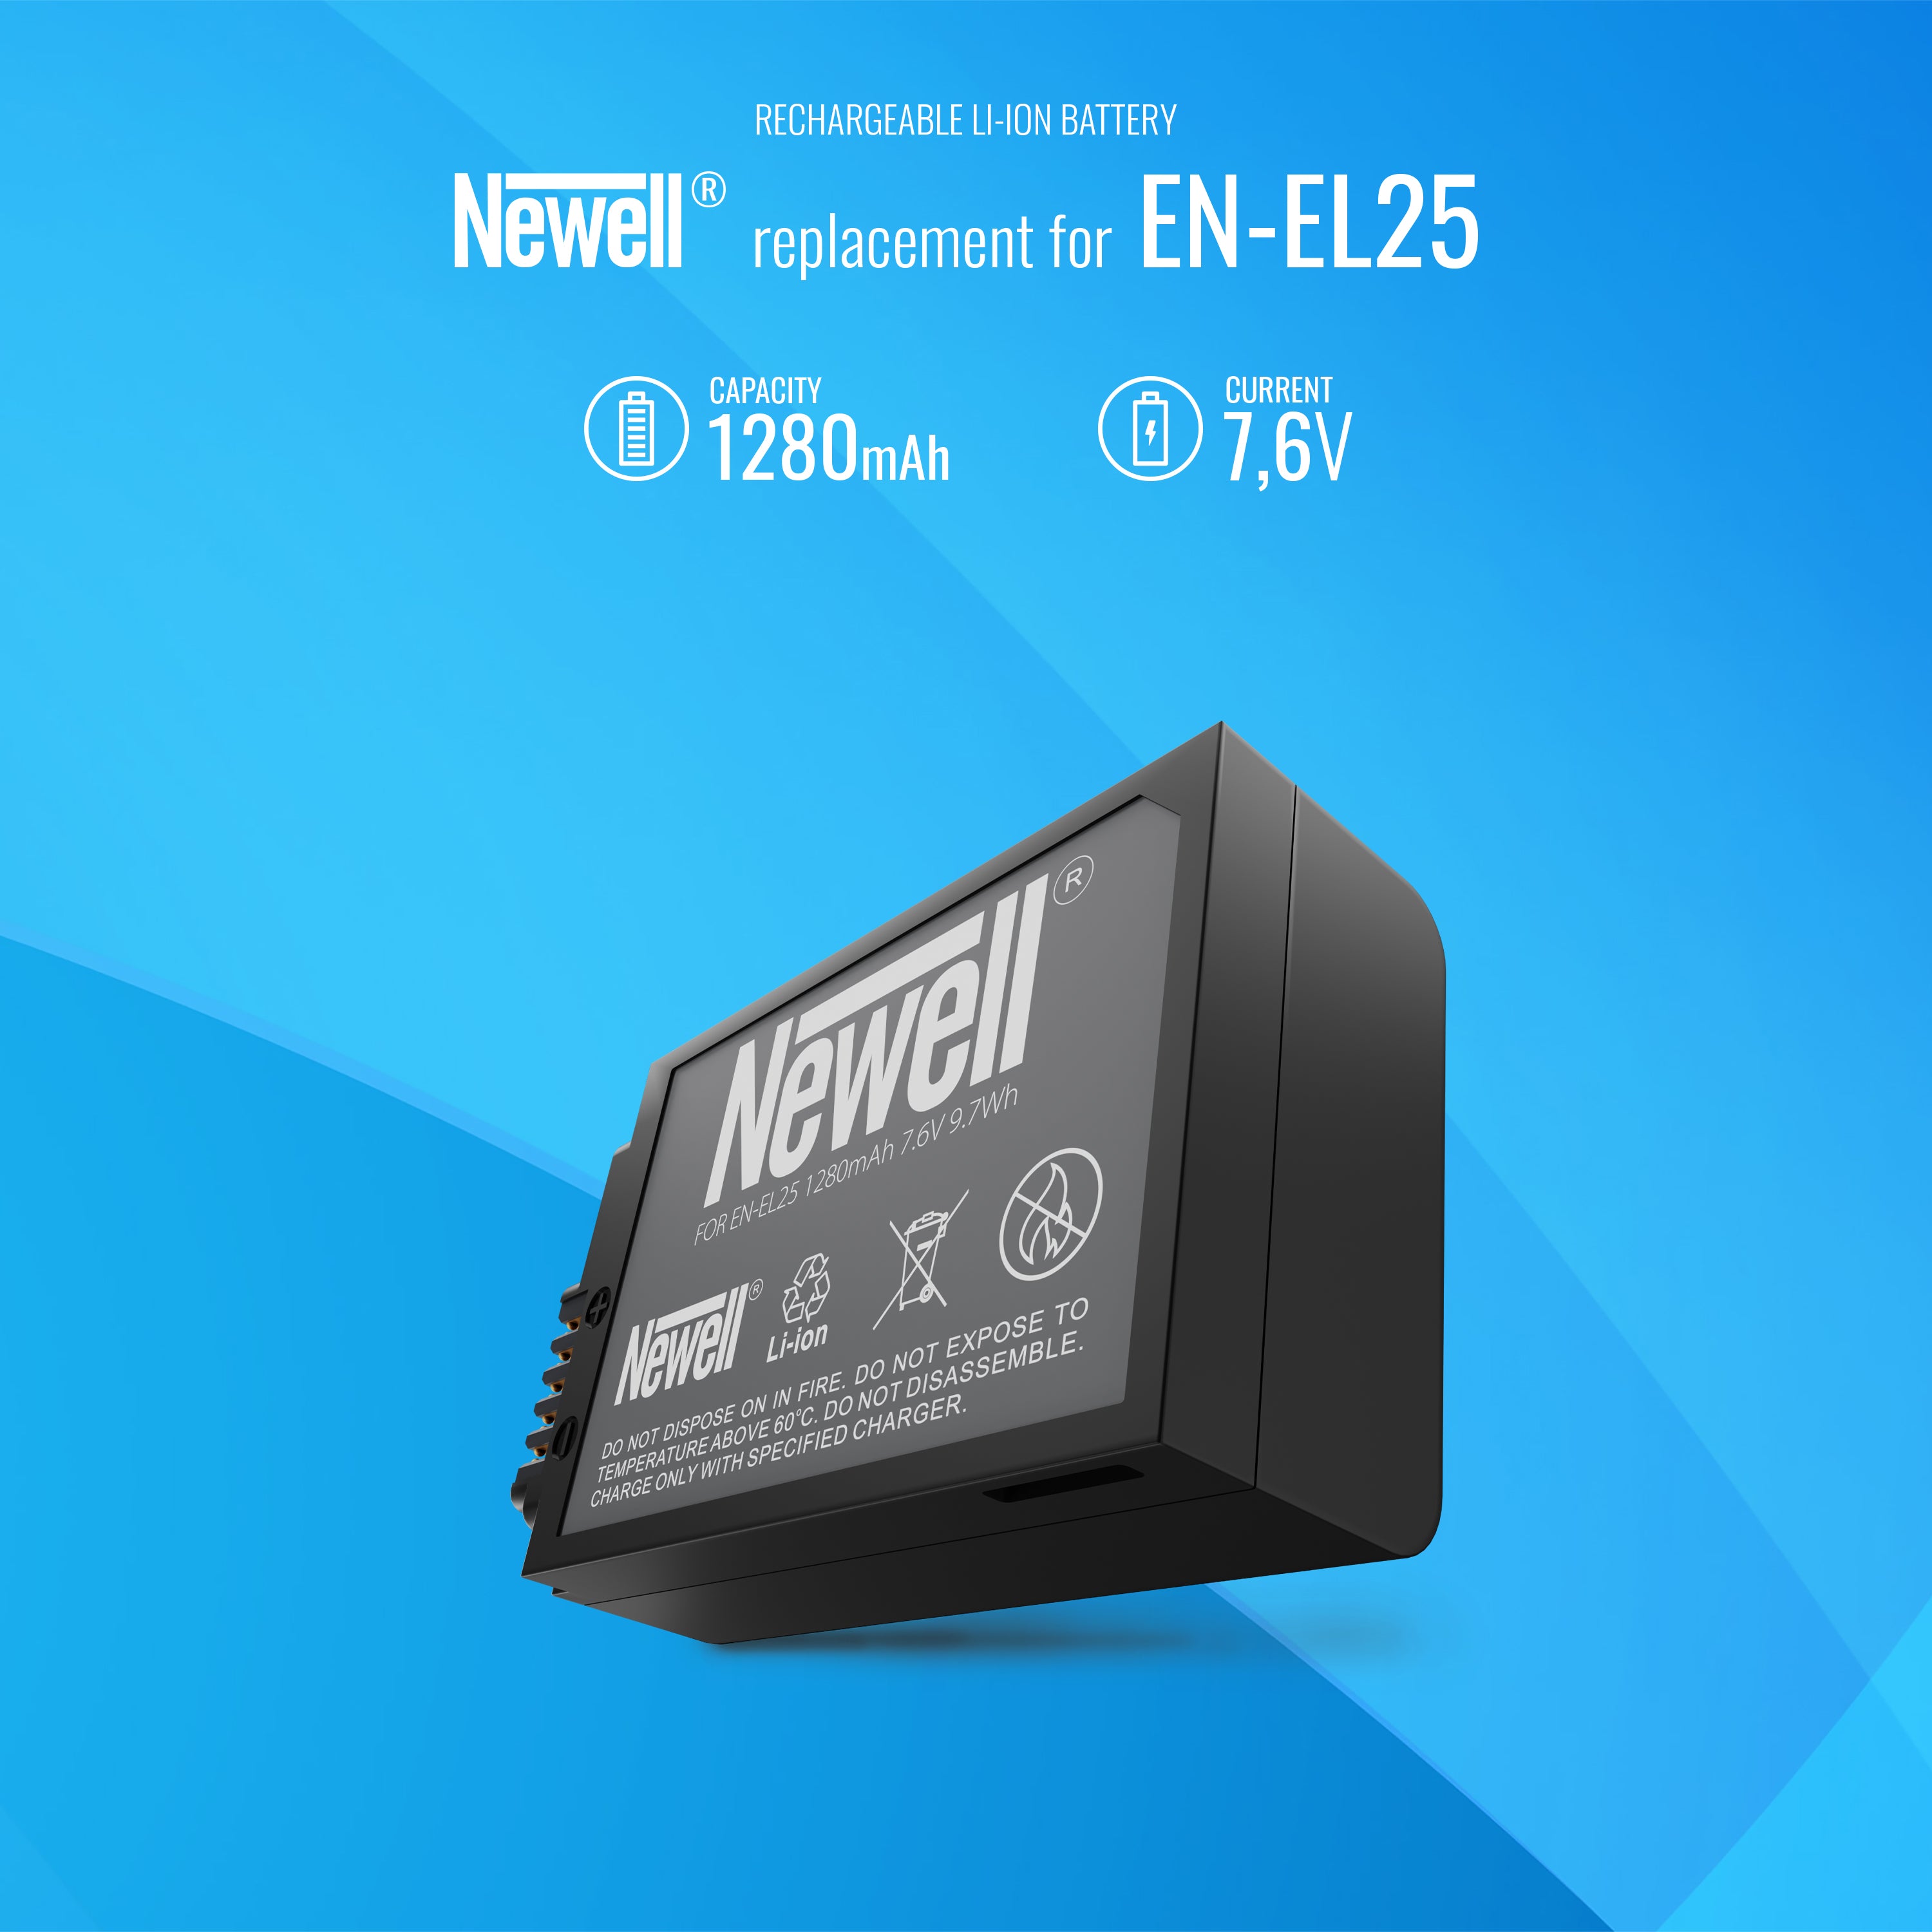 Newell rechargeable battery EN-EL25